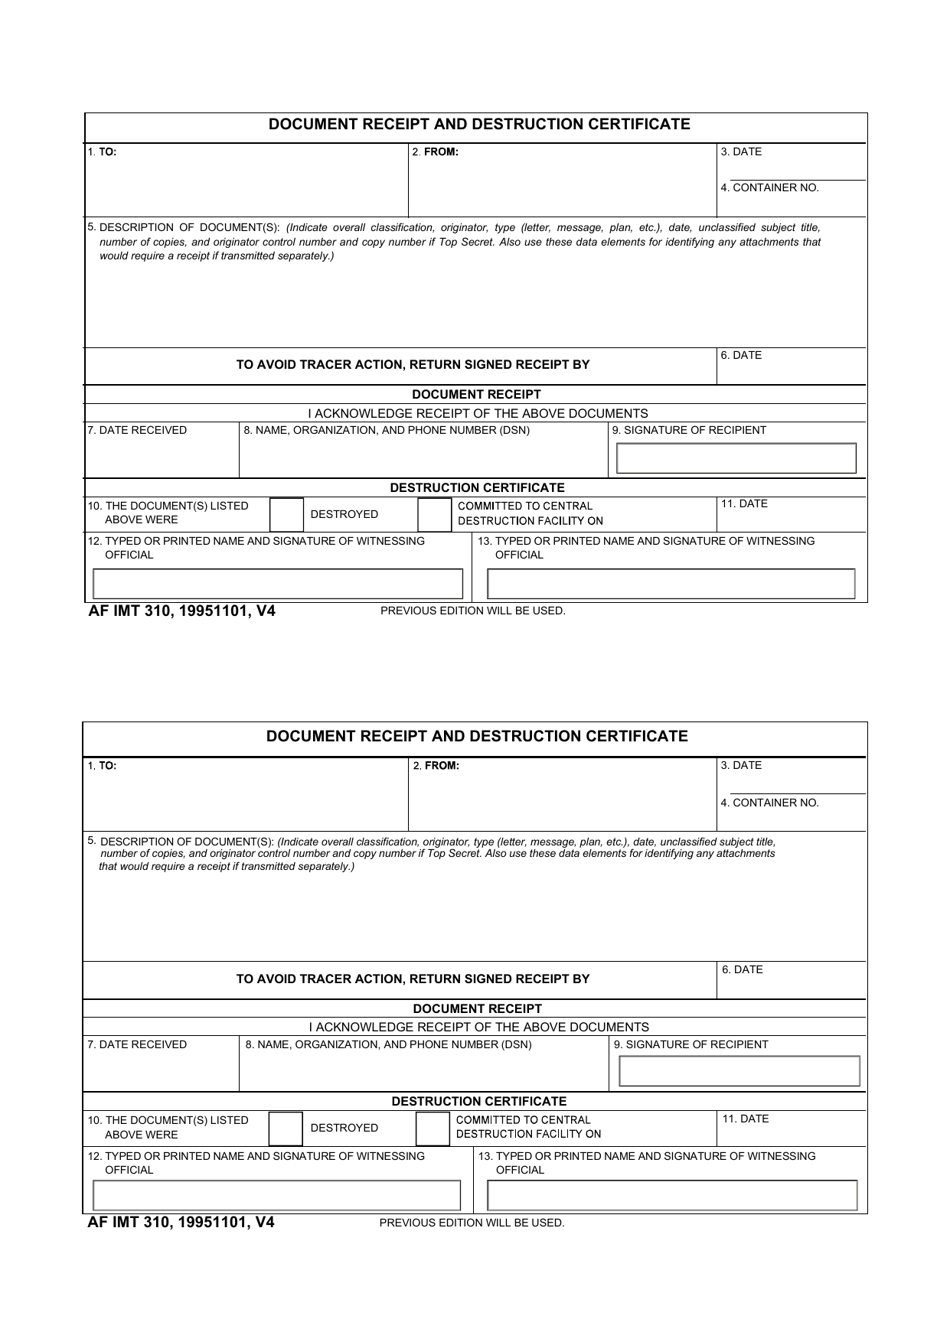 AF IMT Form 310 Document Receipt and Destruction Certificate, Page 1